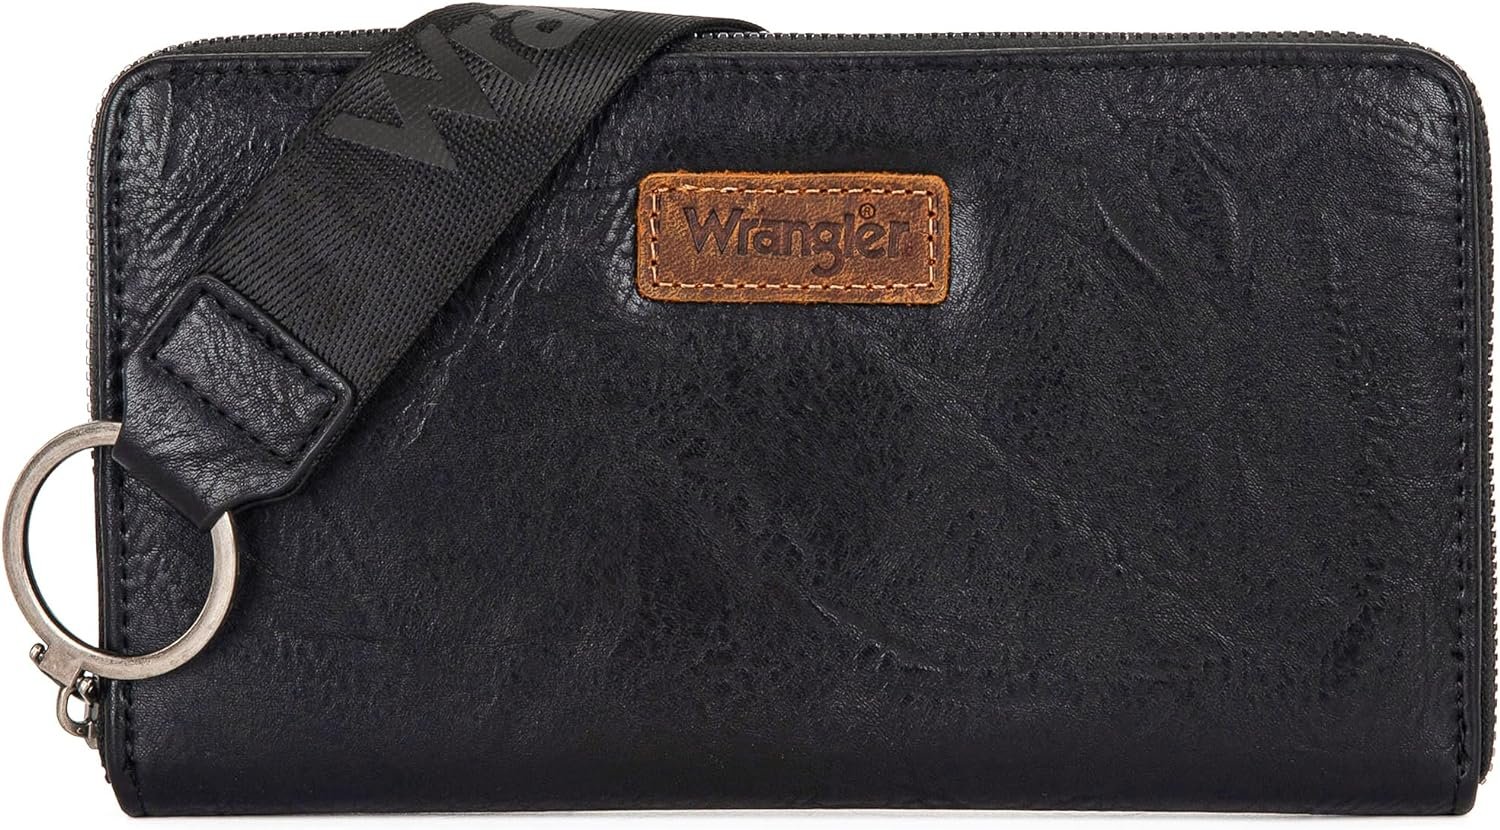 Wrangler Womens Wallet Wristlet Long Purse Clutch Large Capacity